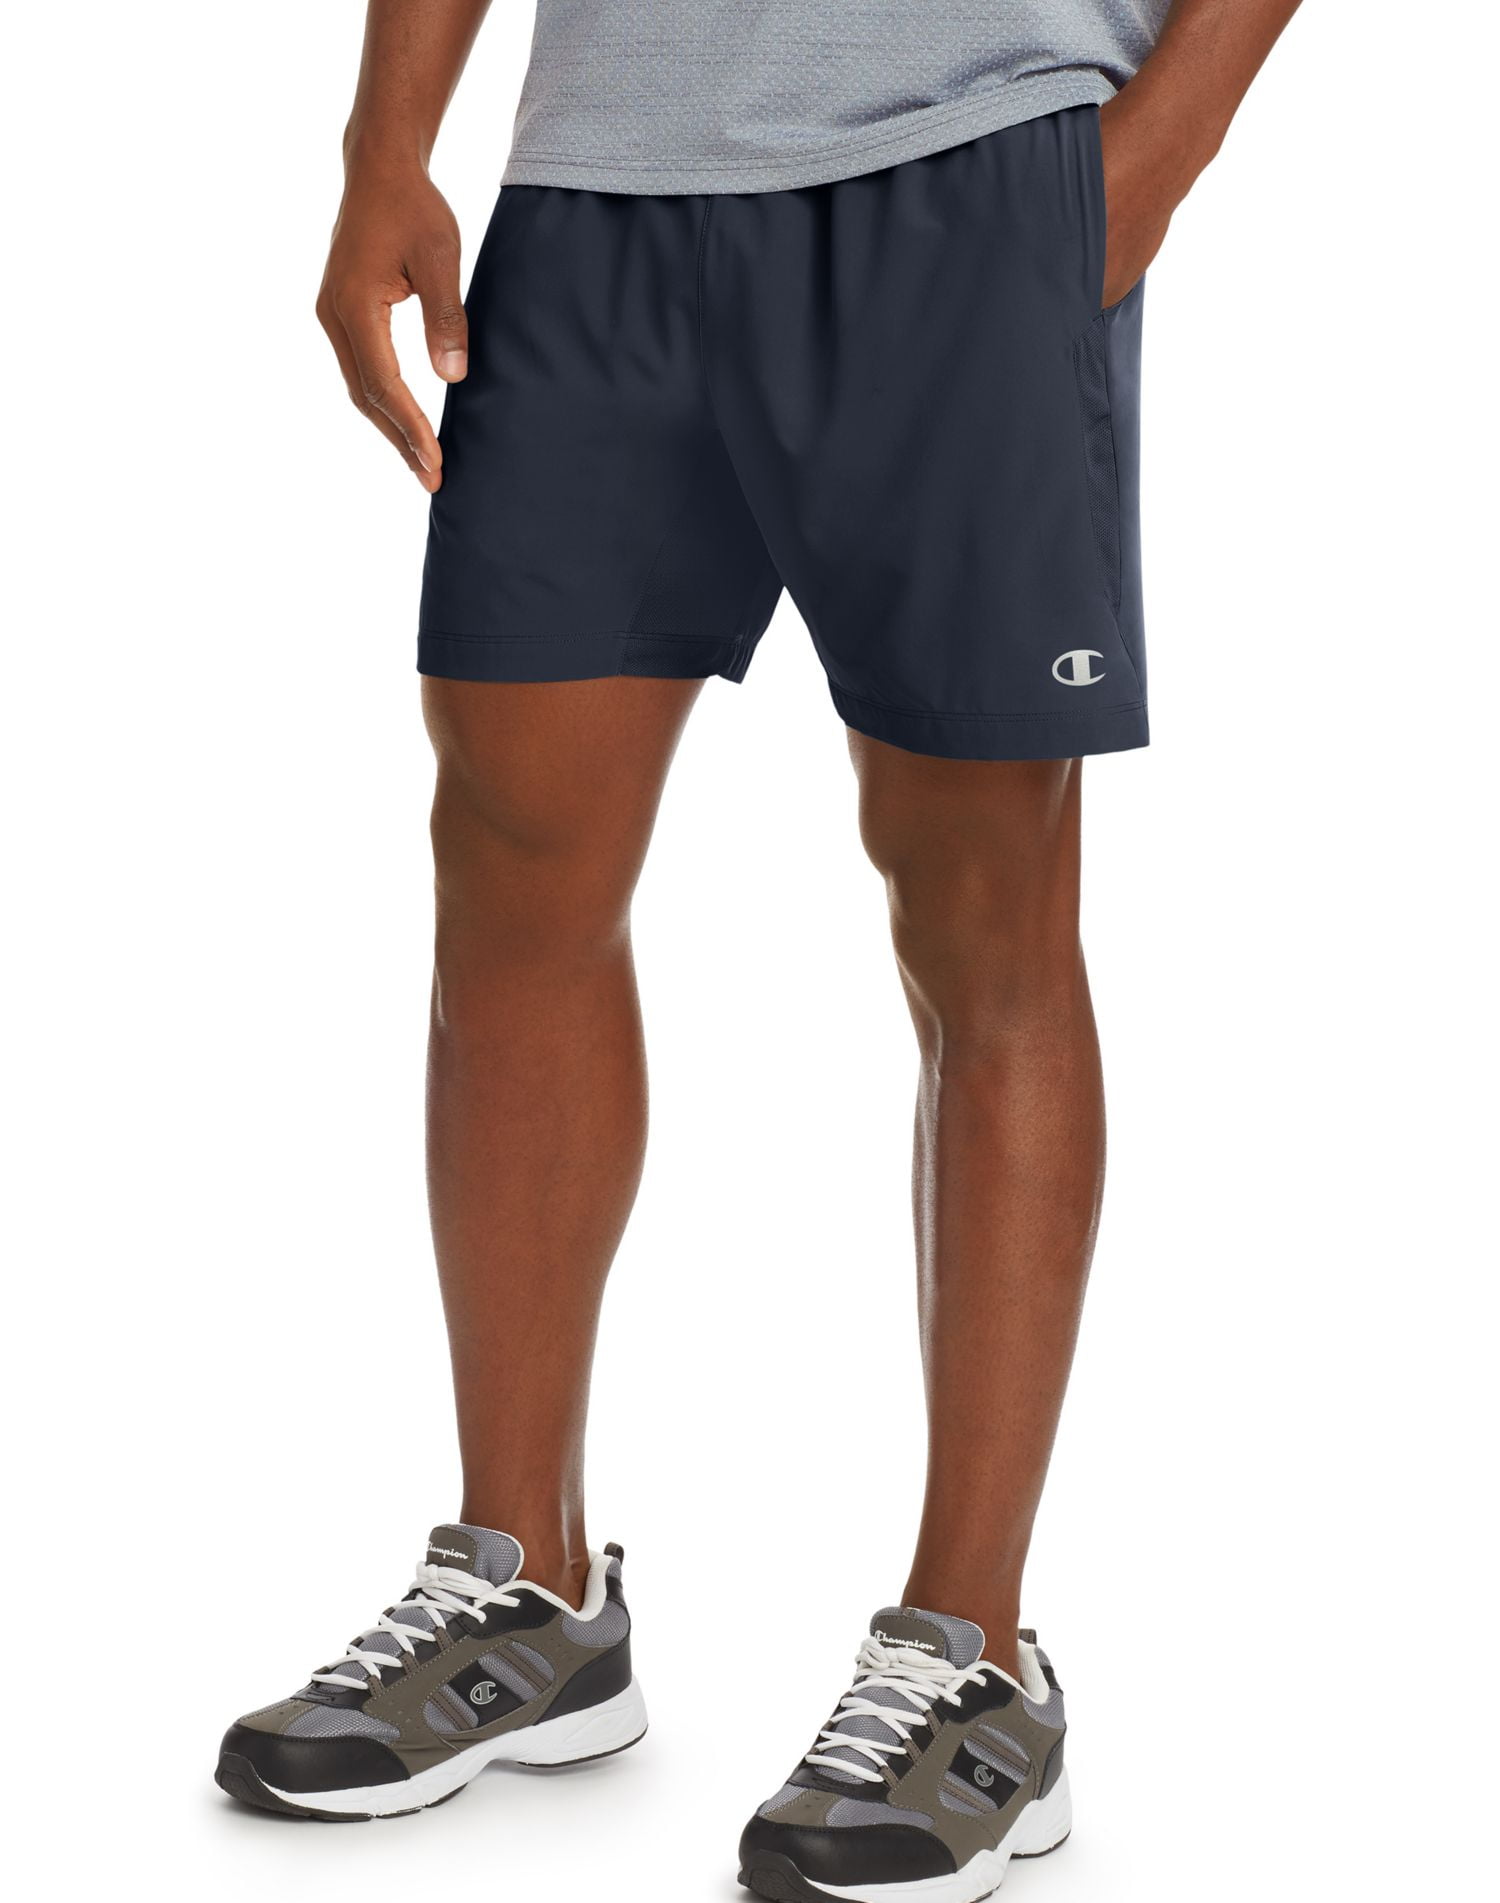 running shorts men canada